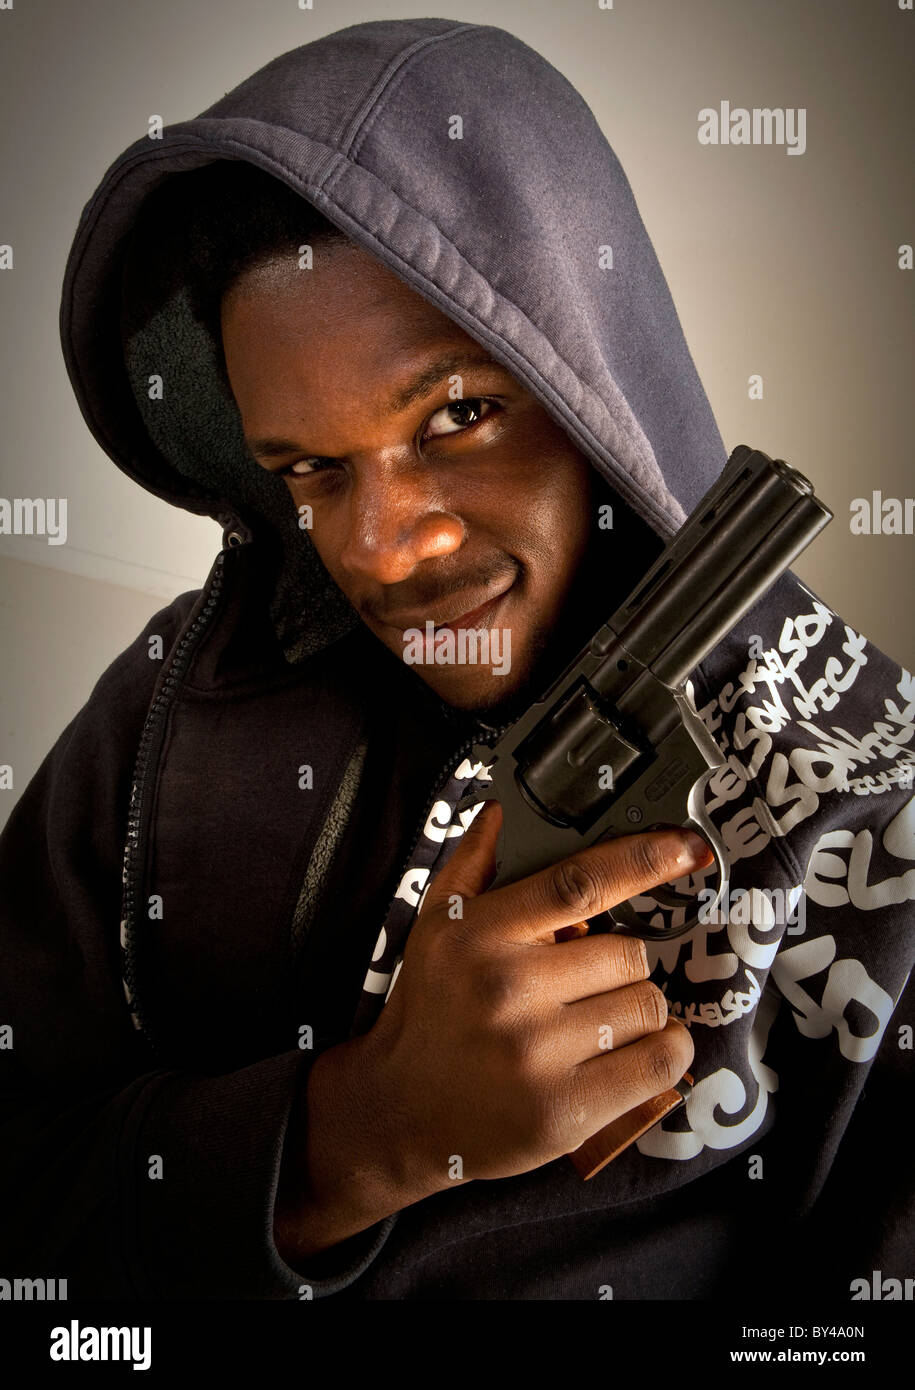 Joven negro modelo masculino posando con una pistola Foto de stock